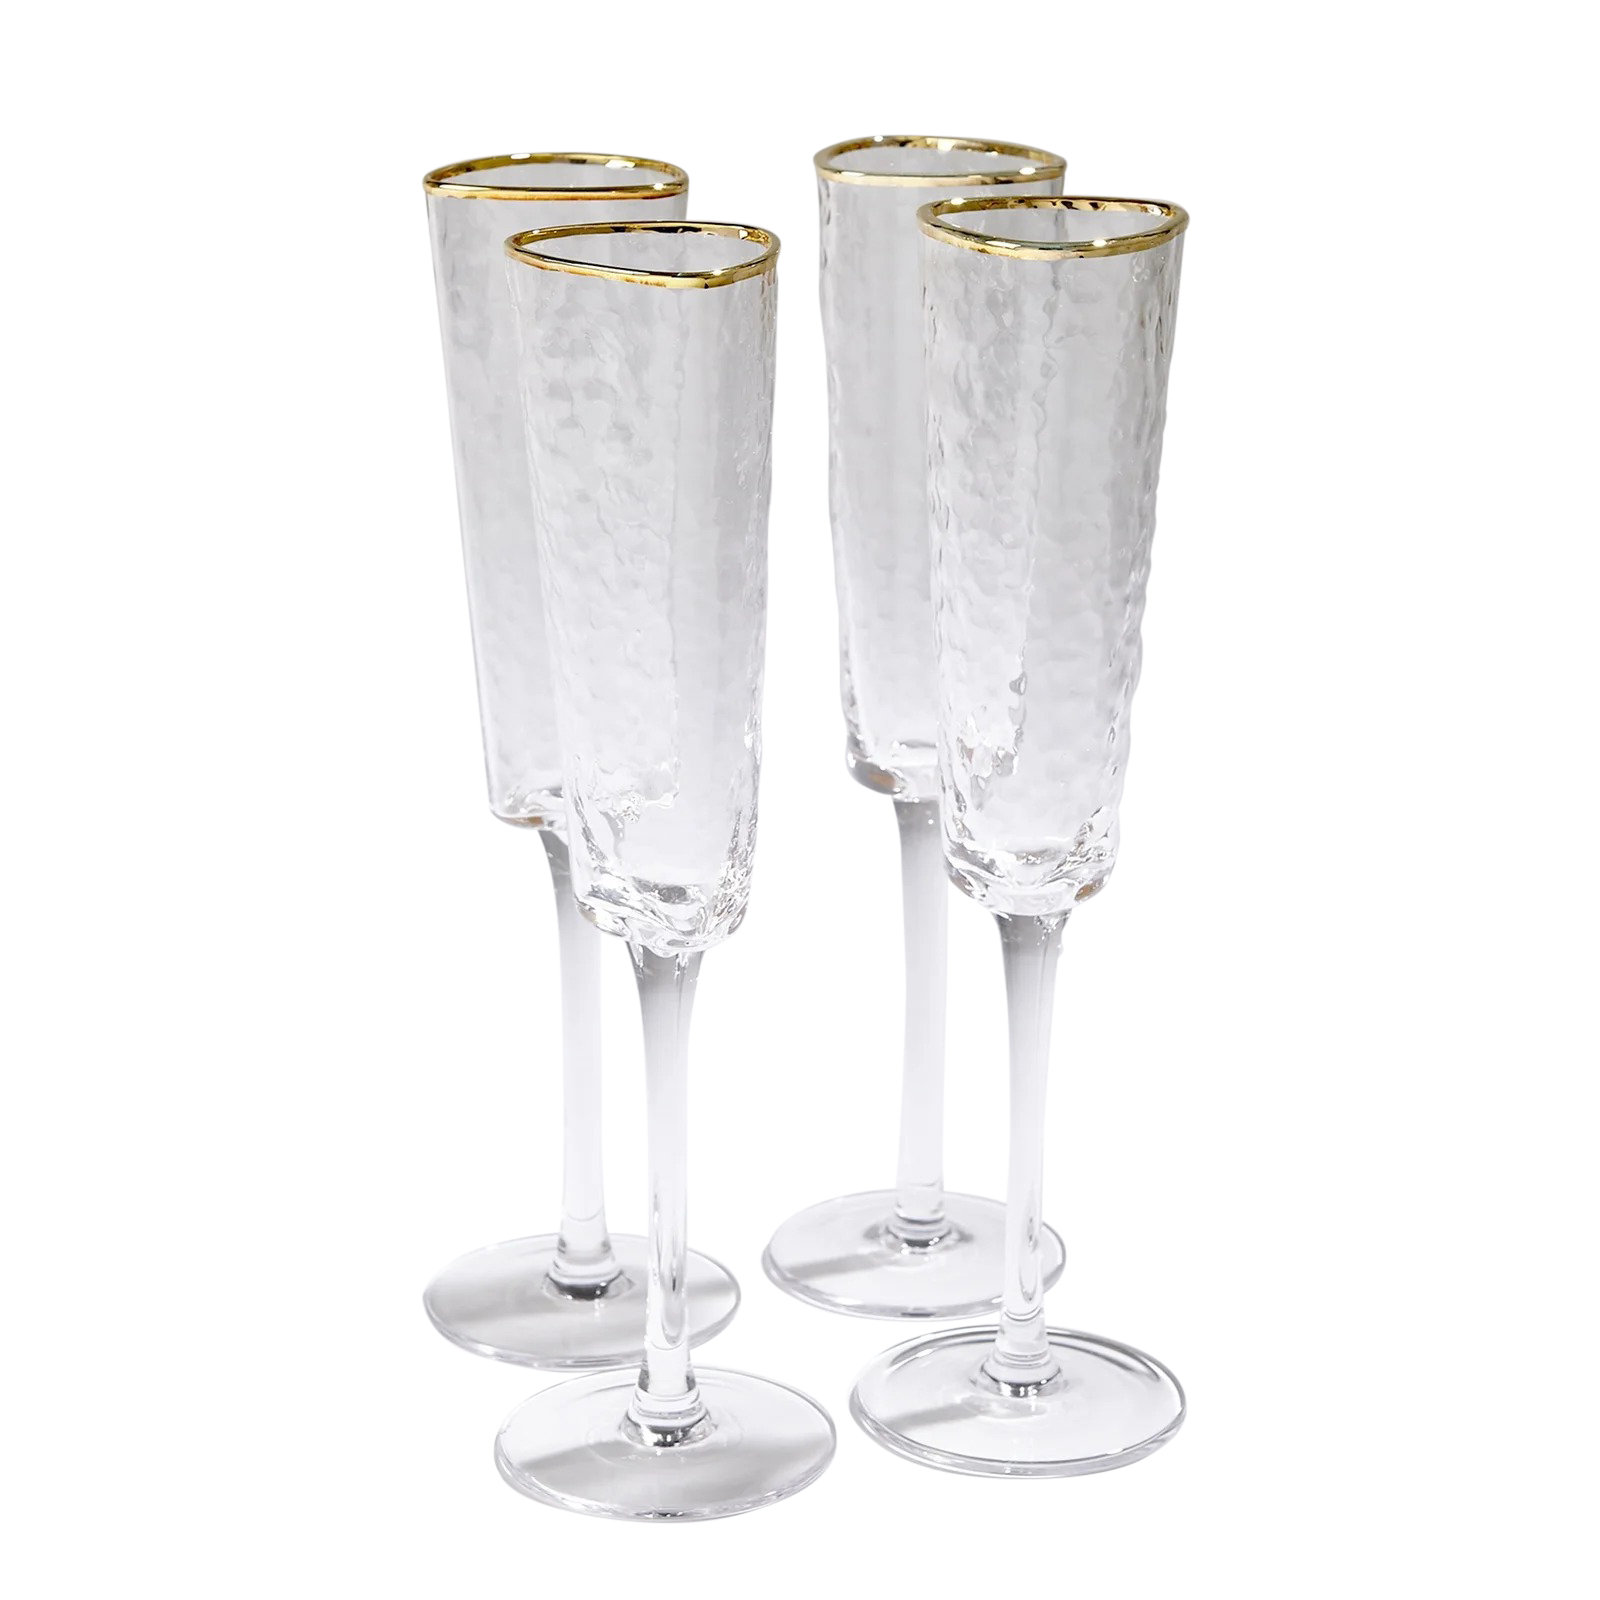 Modern Stemless Wine Flute Glasses w/ Hammered Brass Plated Design, Set of 4